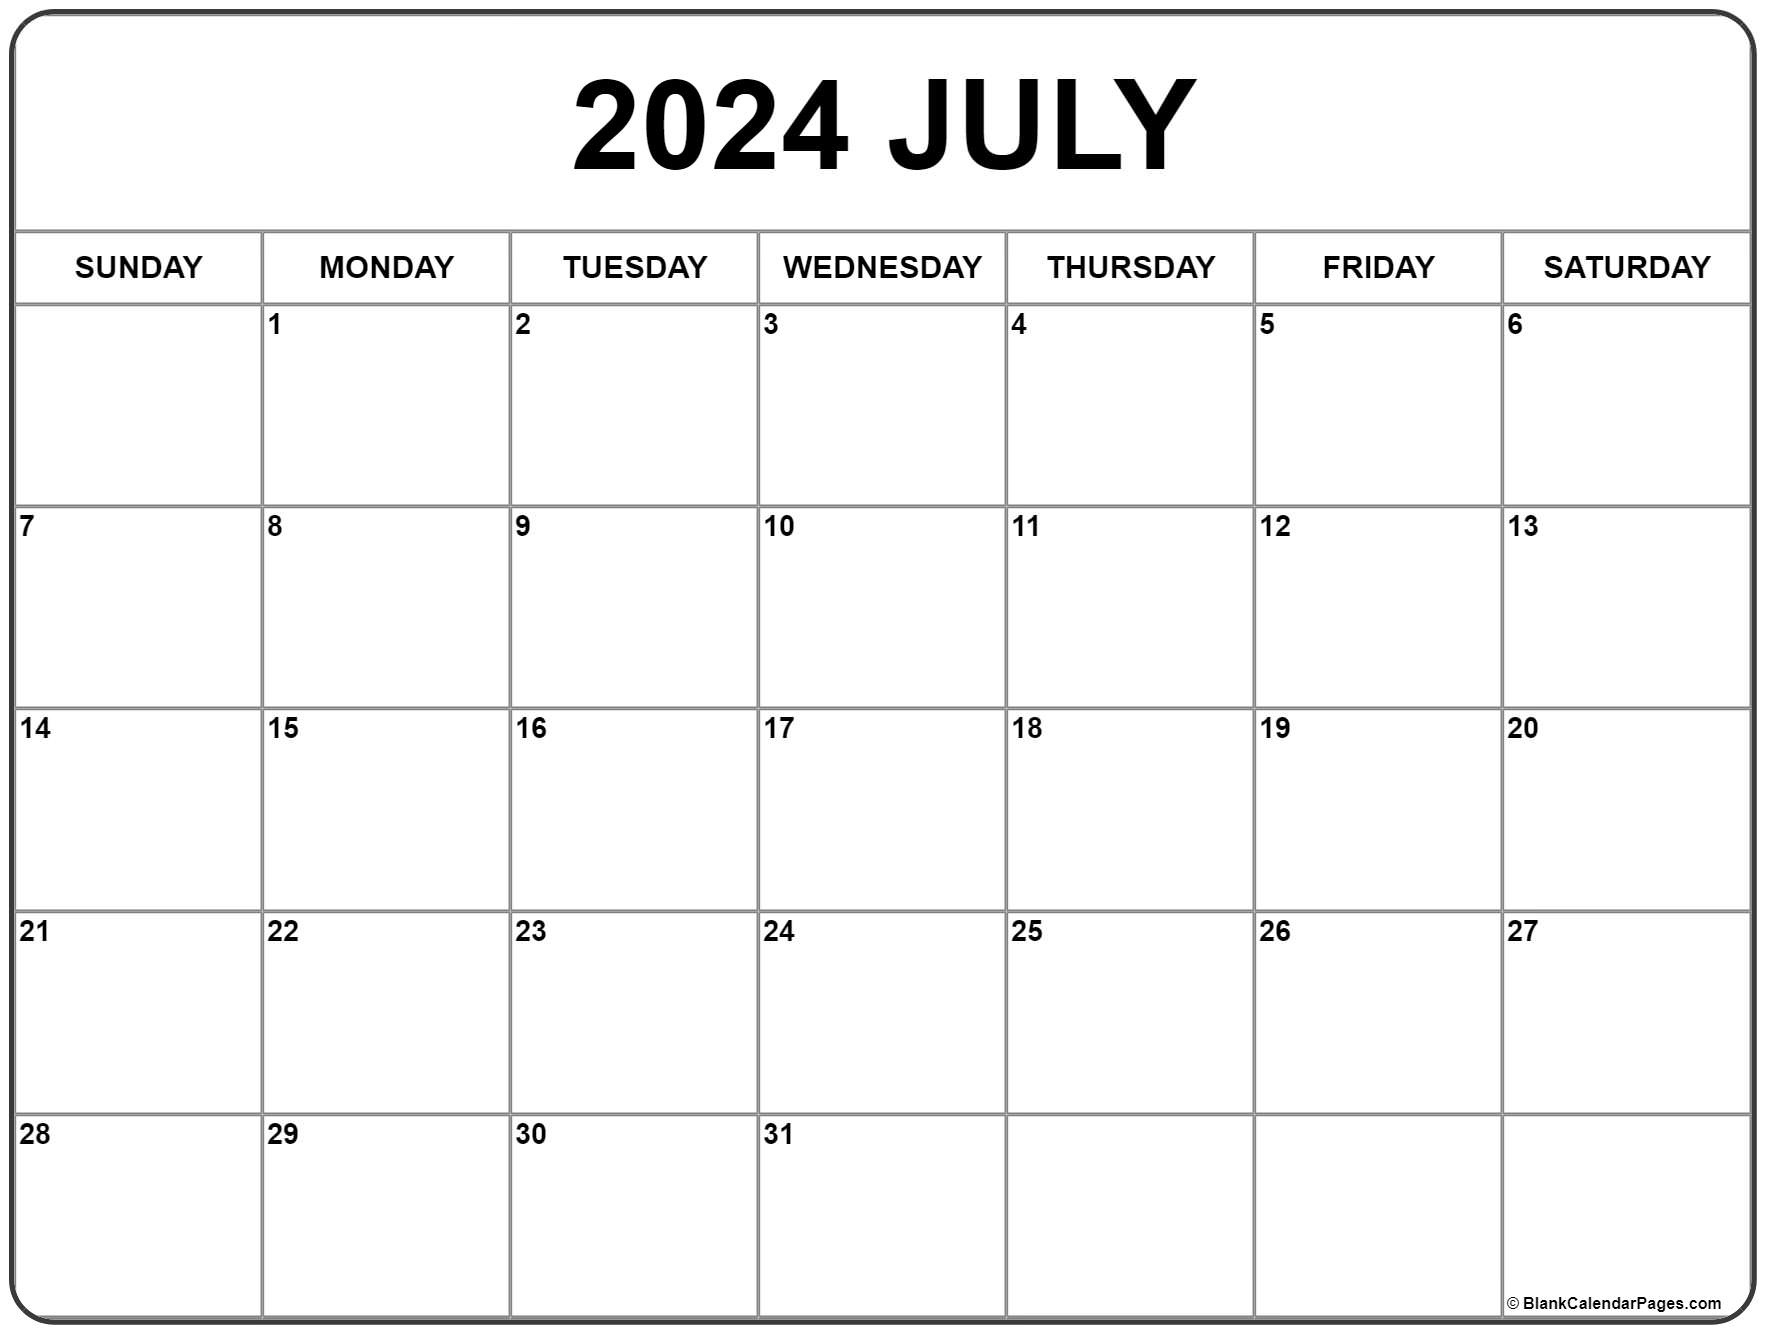 July 2024 Calendar | Free Printable Calendar within Calendar Template July 2024